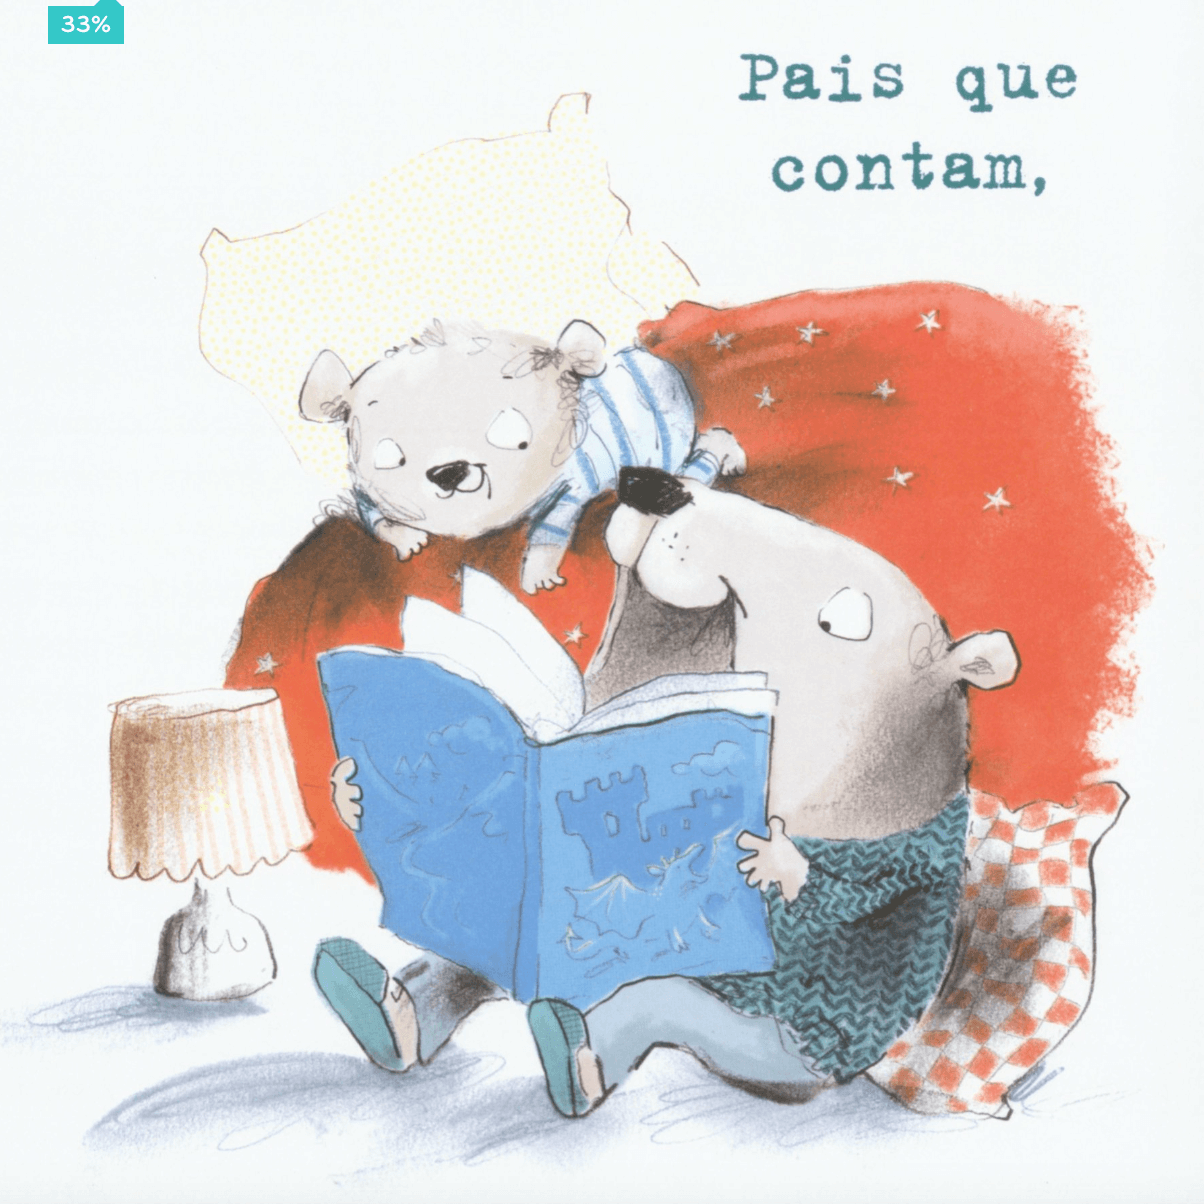 Livro Pai Fantástico - Alison Brown Booksmile Mini-Me - Baby & Kids Store